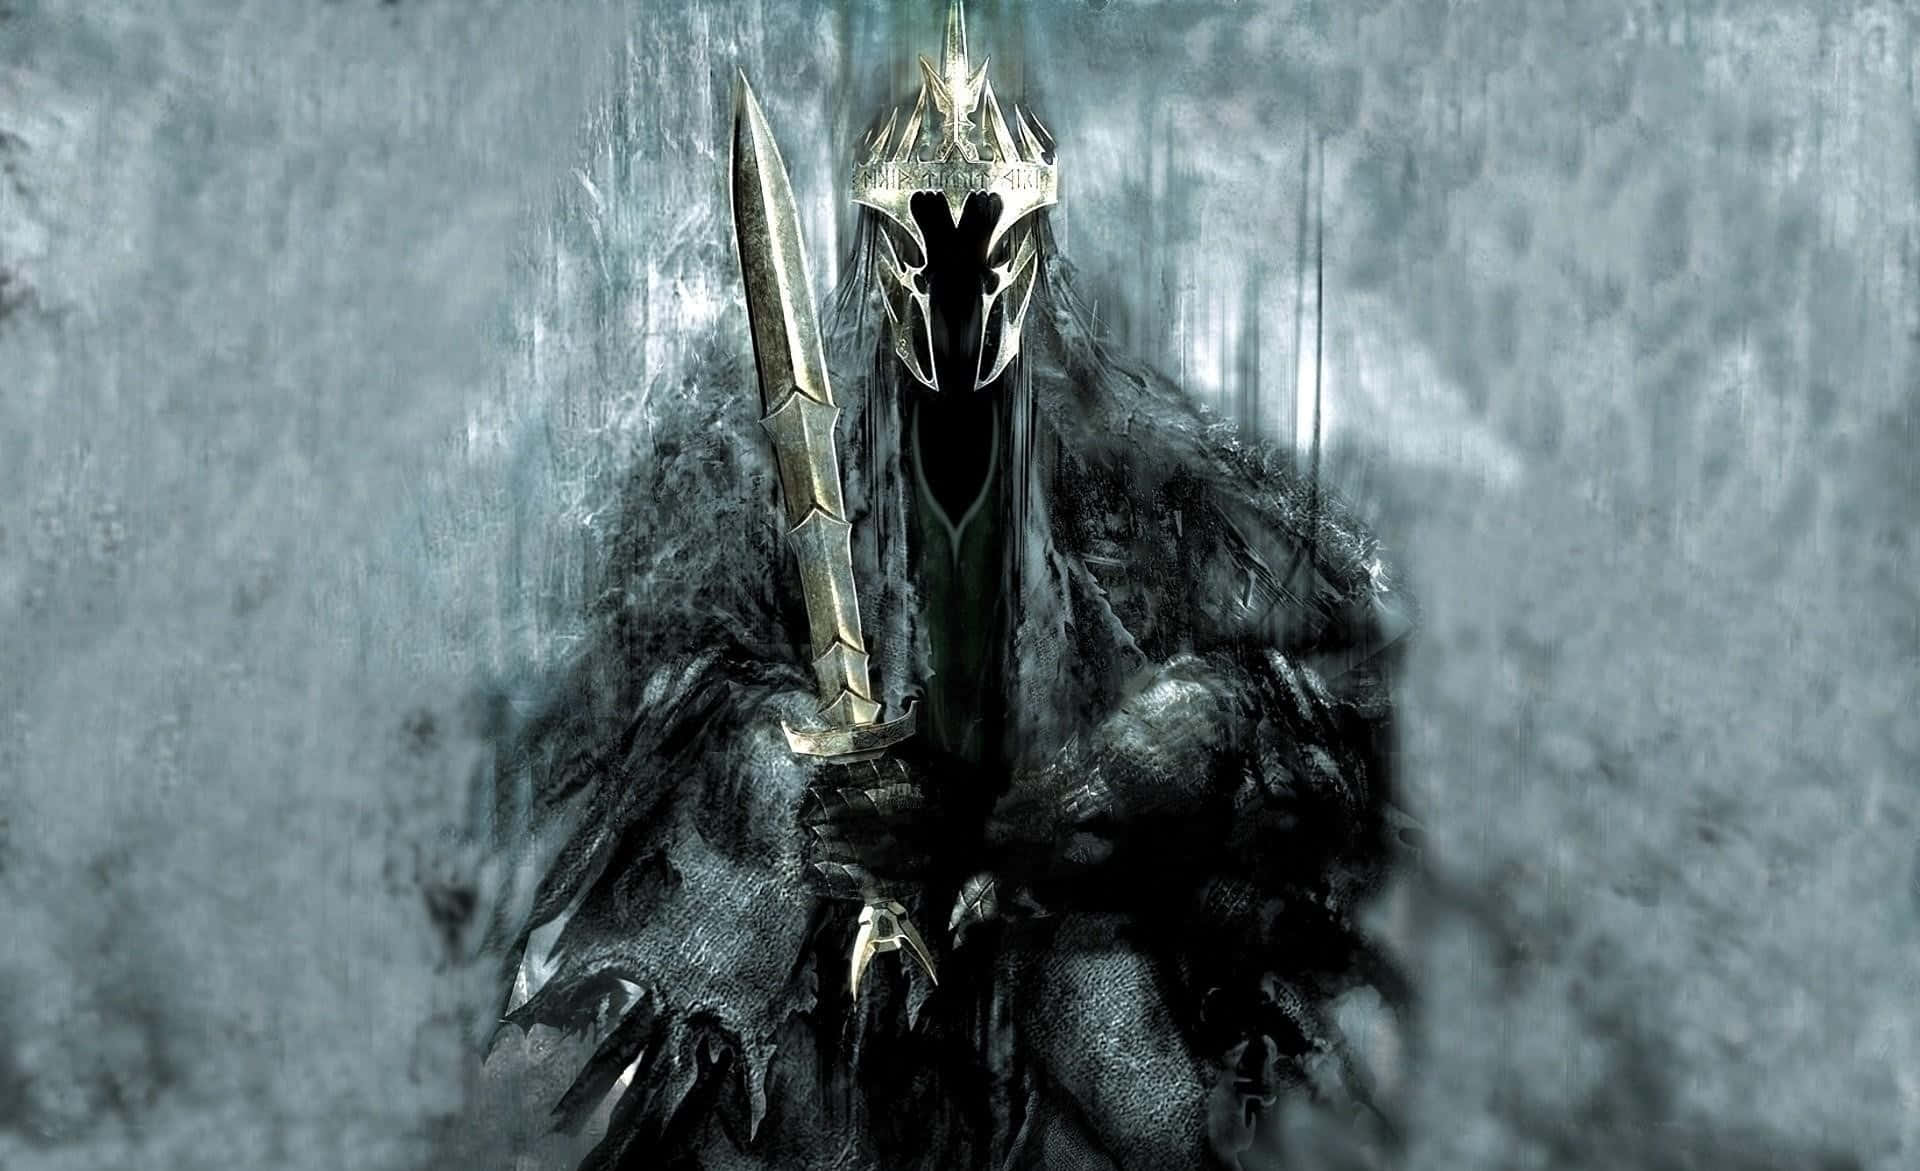 Dark Lord Sauron Armored Figure Wallpaper